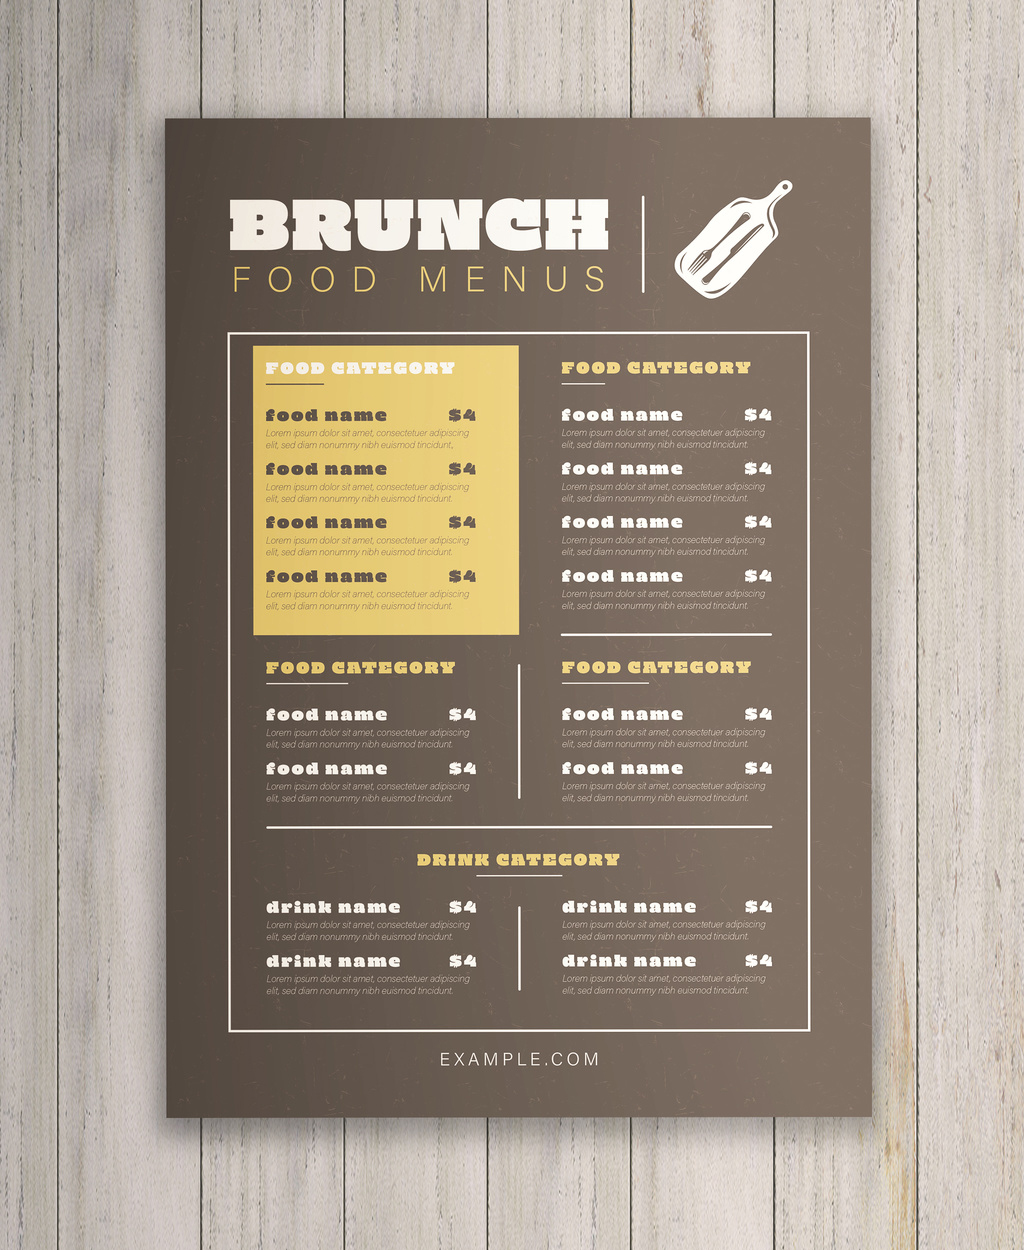 brunch-food-menu-illustrator